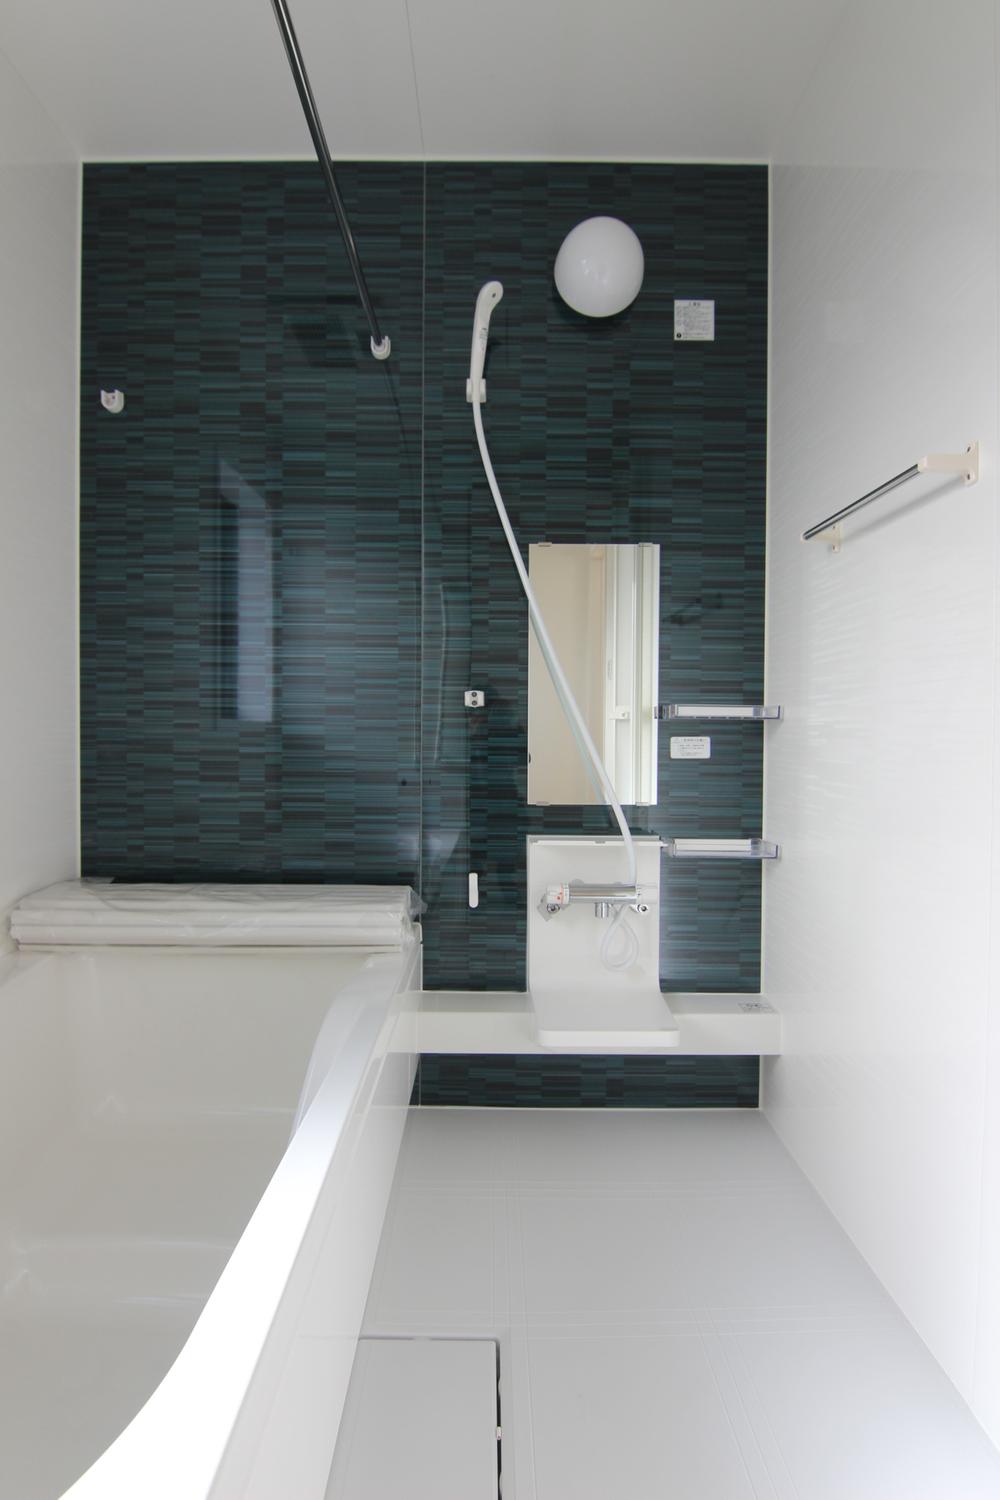 Bathroom. ○ 3 Building: system bus ・ With bathroom ventilation dryer